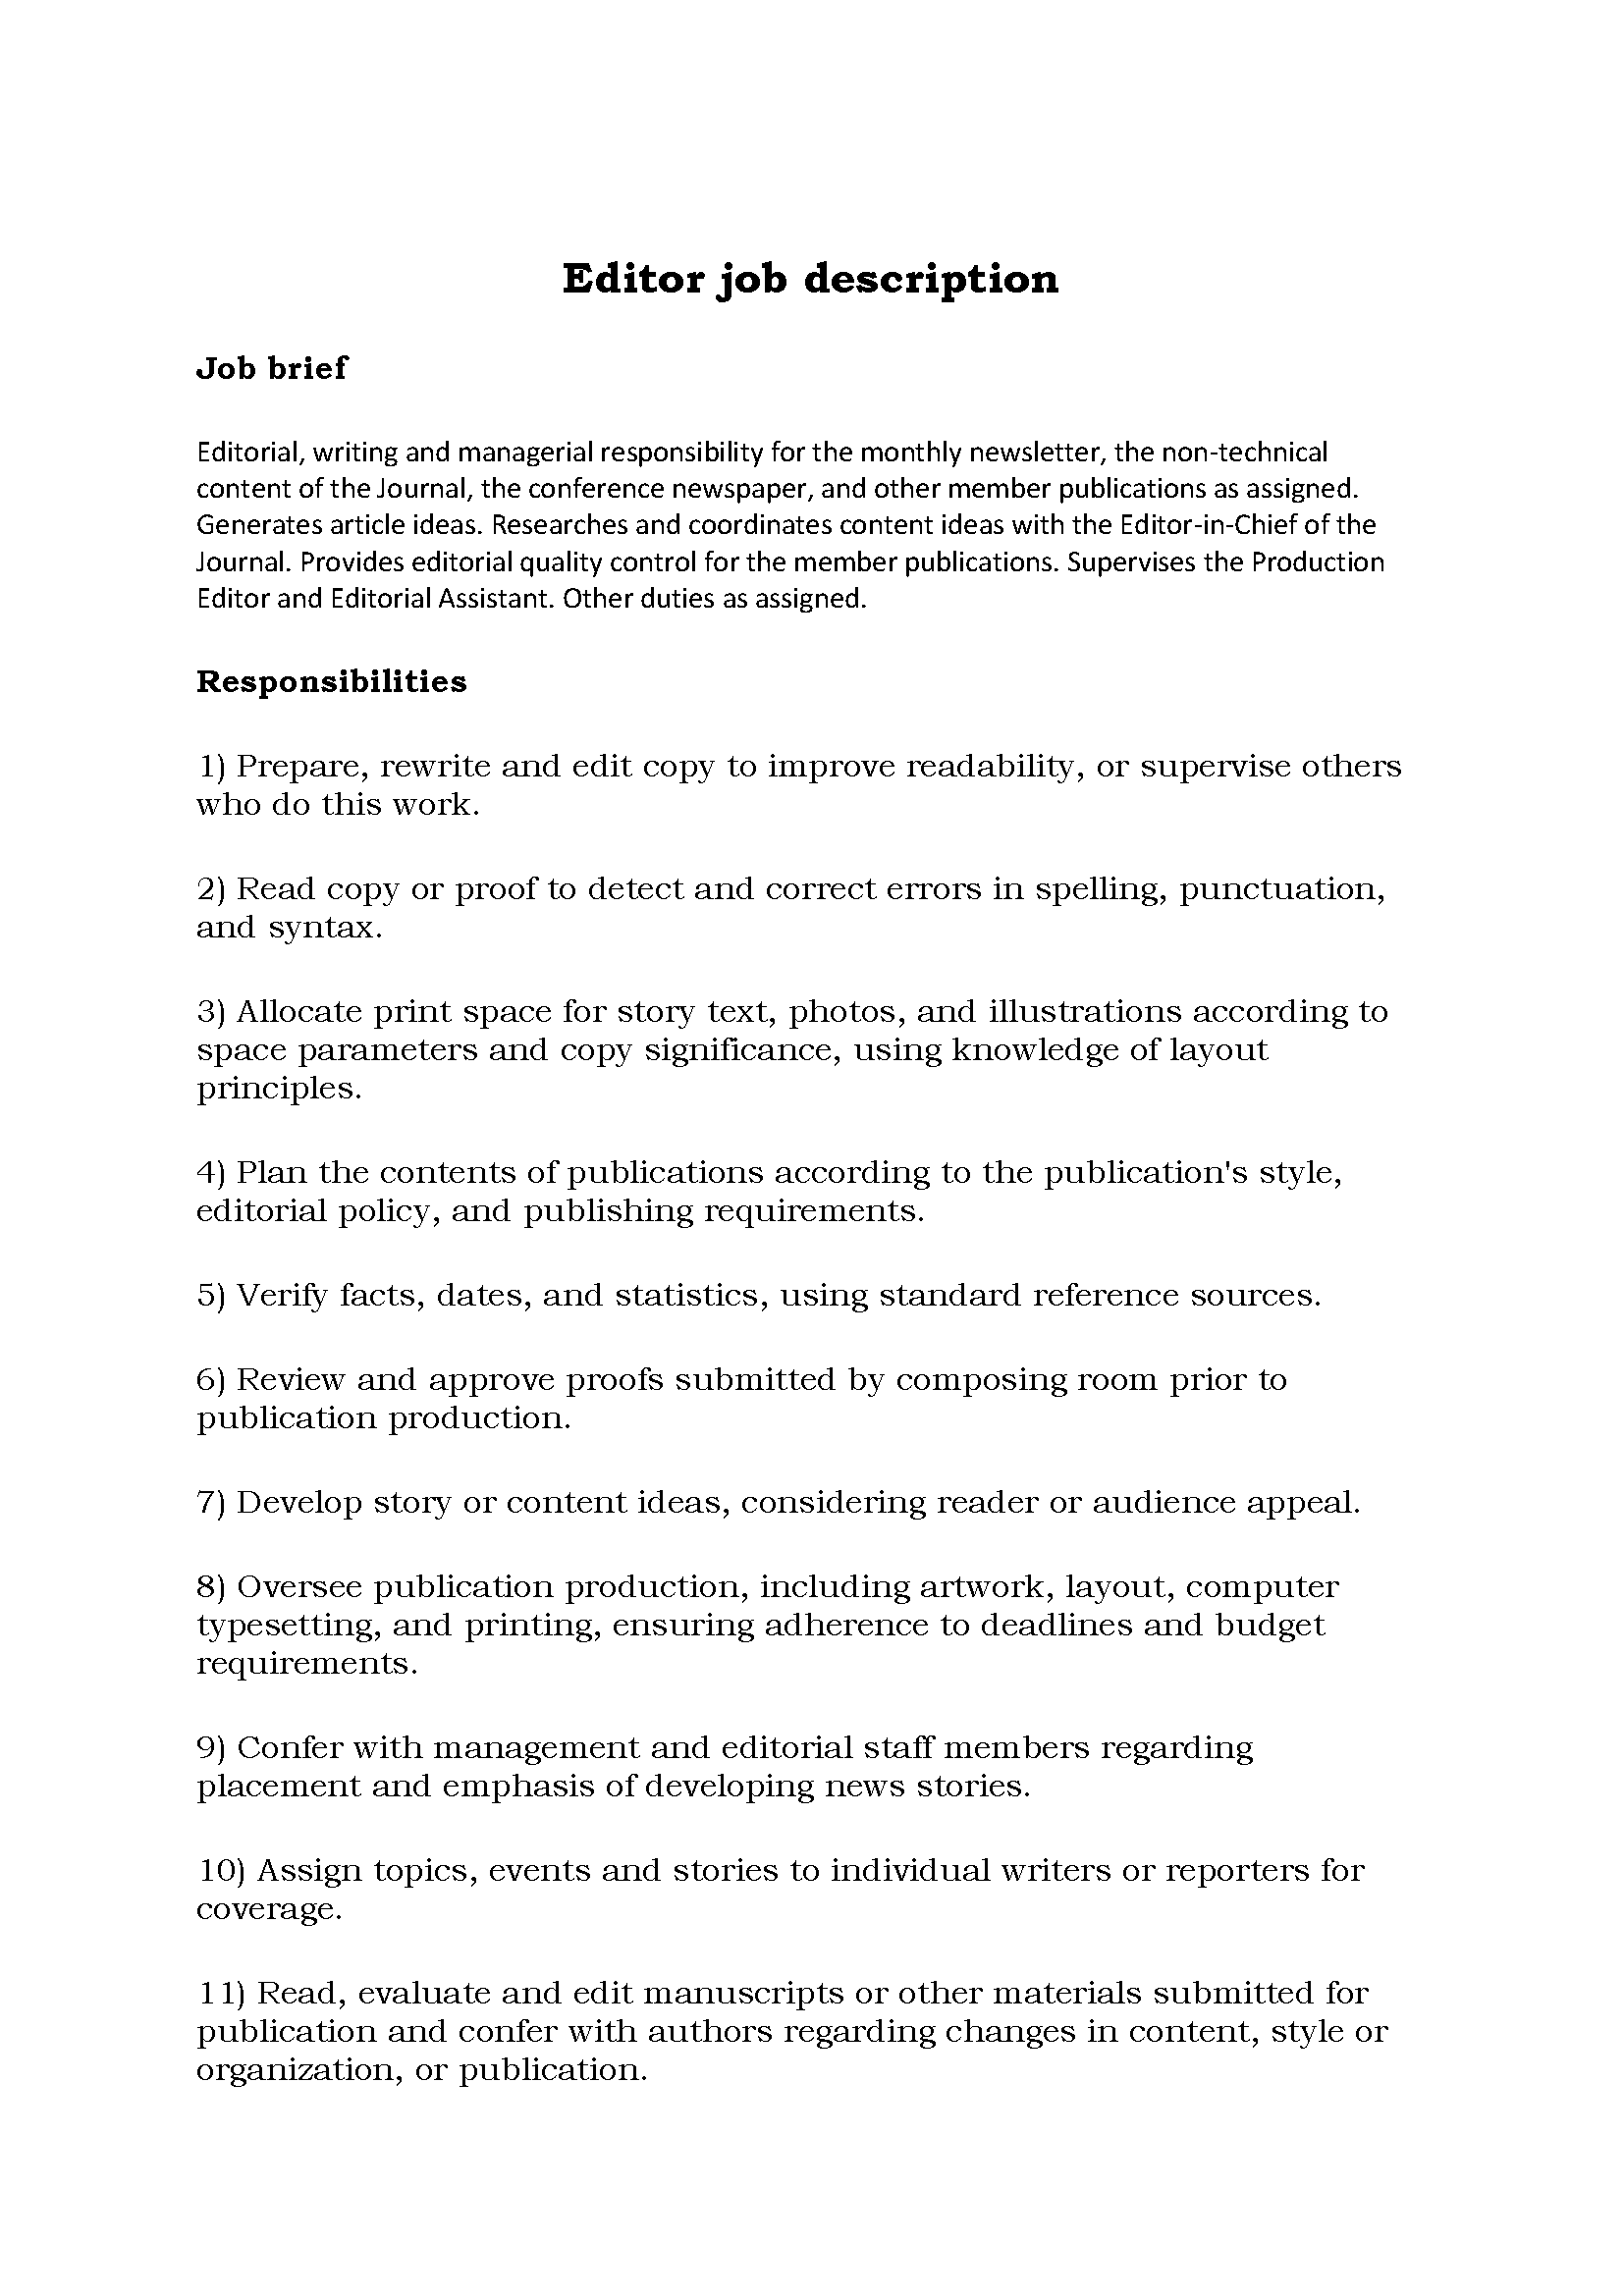 34-Editor job description